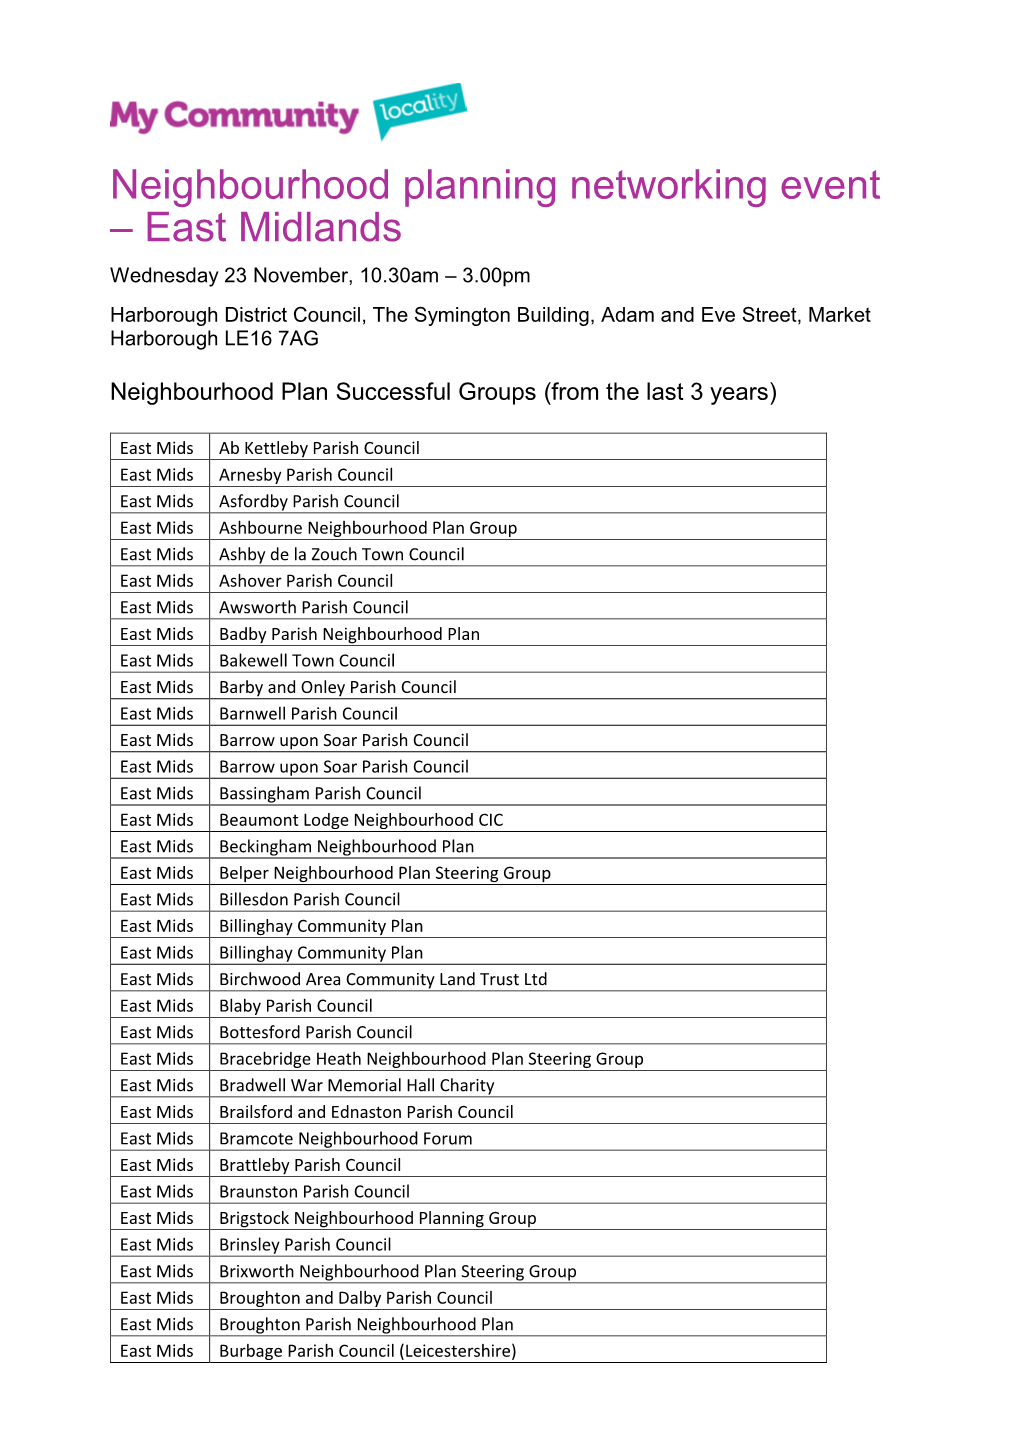 East Midlands Wednesday 23 November, 10.30Am – 3.00Pm